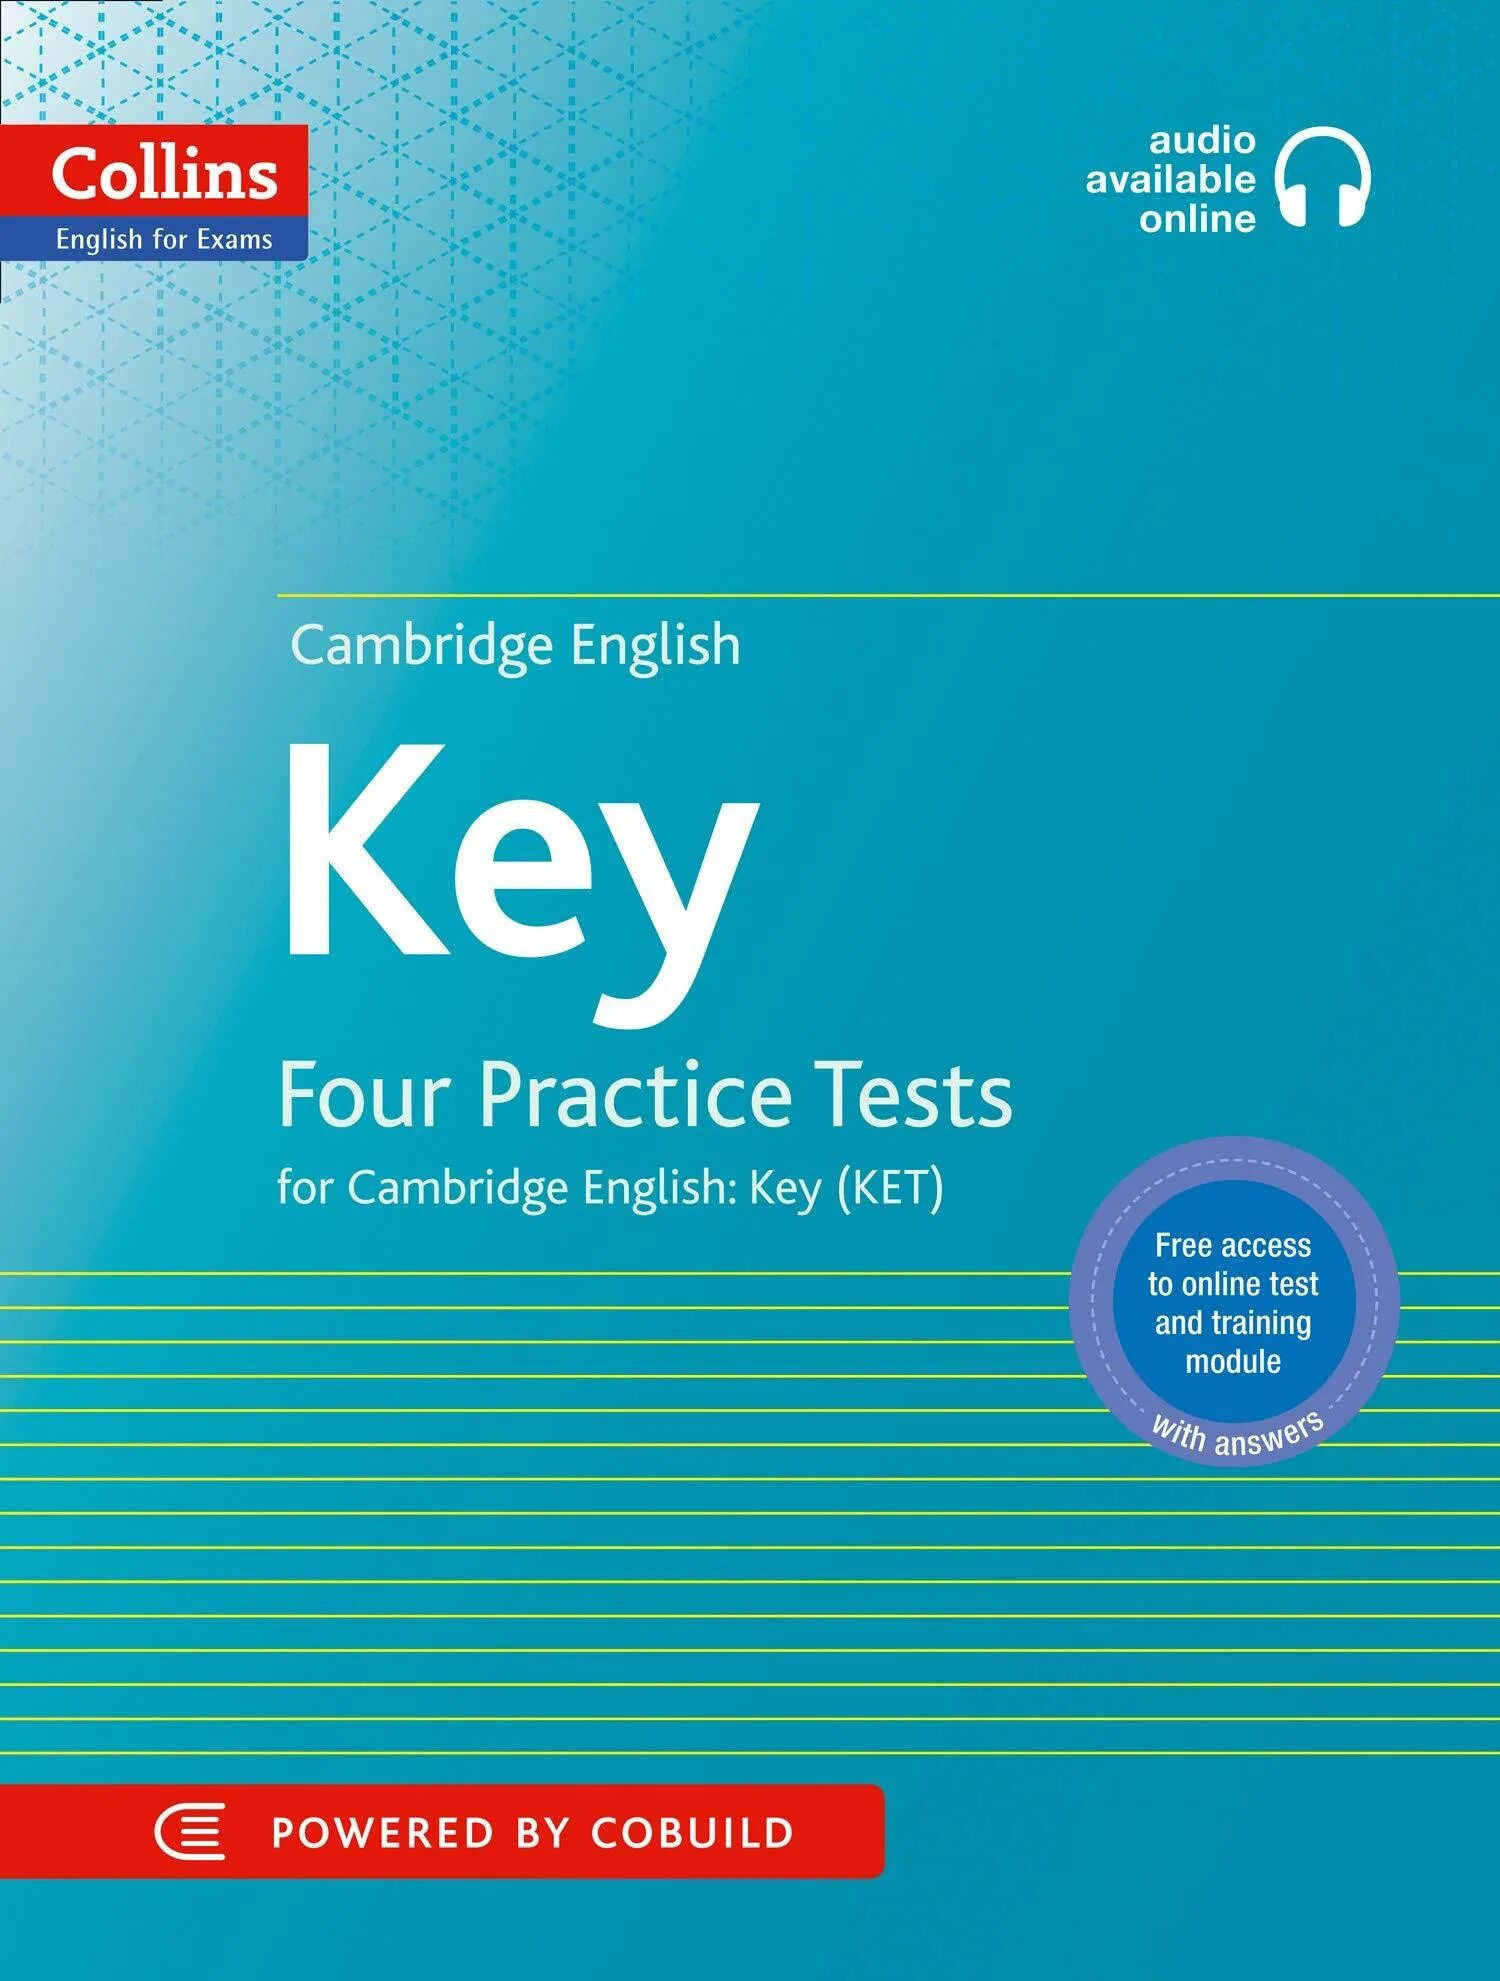 English 4 practice. Ket Practice Tests. Ket Exam Practice Tests. Key Cambridge. Ket Cambridge.